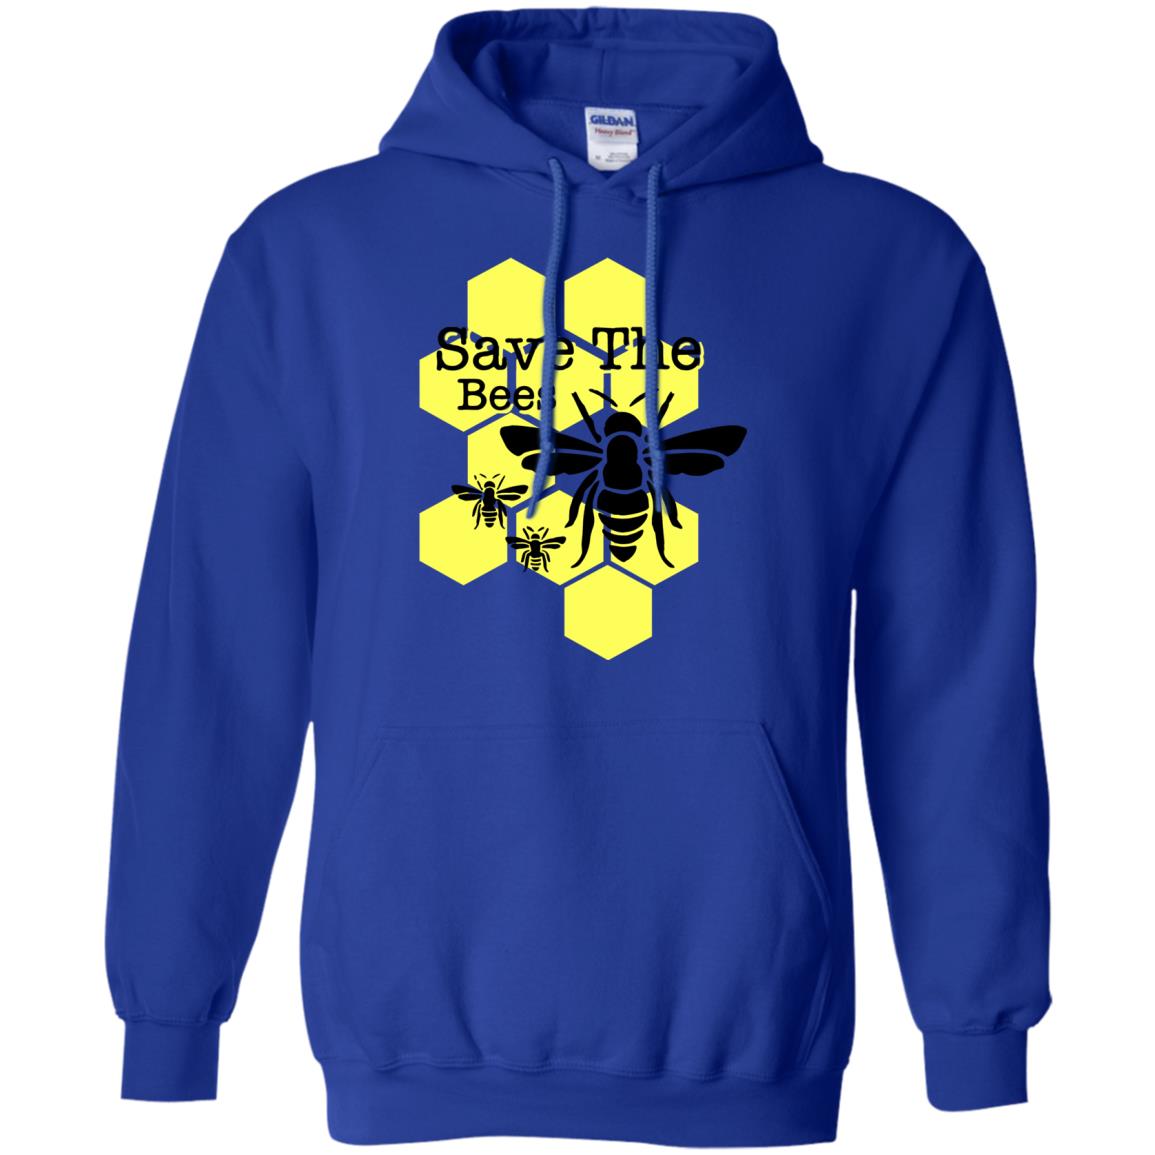 save the bees hoodie - royal blue